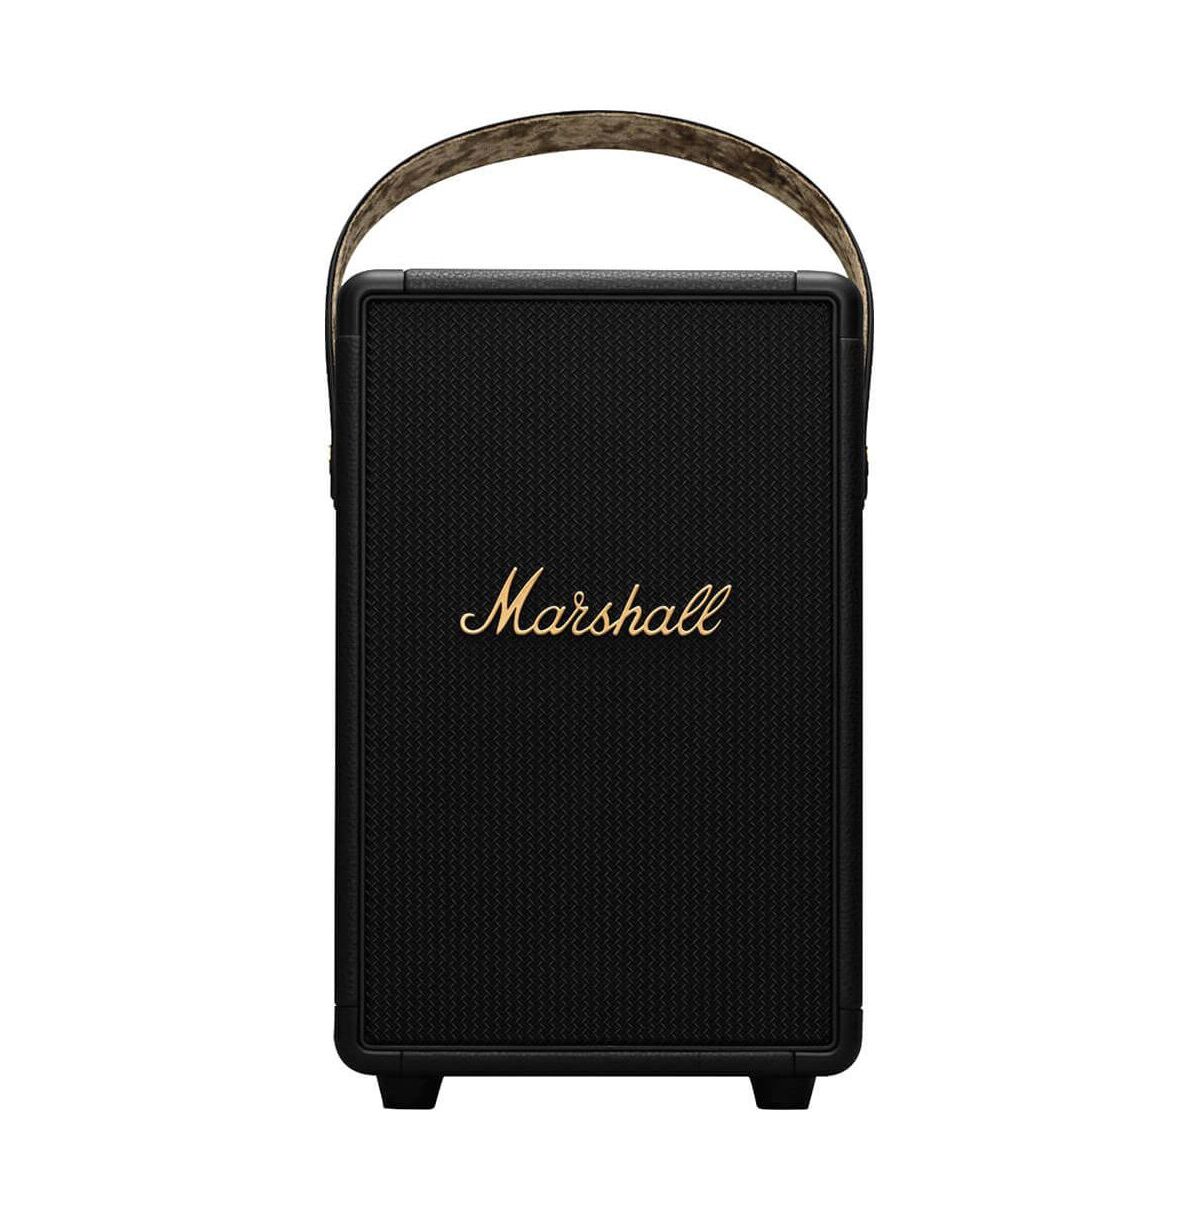 Marshall Tufton Portable Bluetooth Speaker - Black/Brass - Black